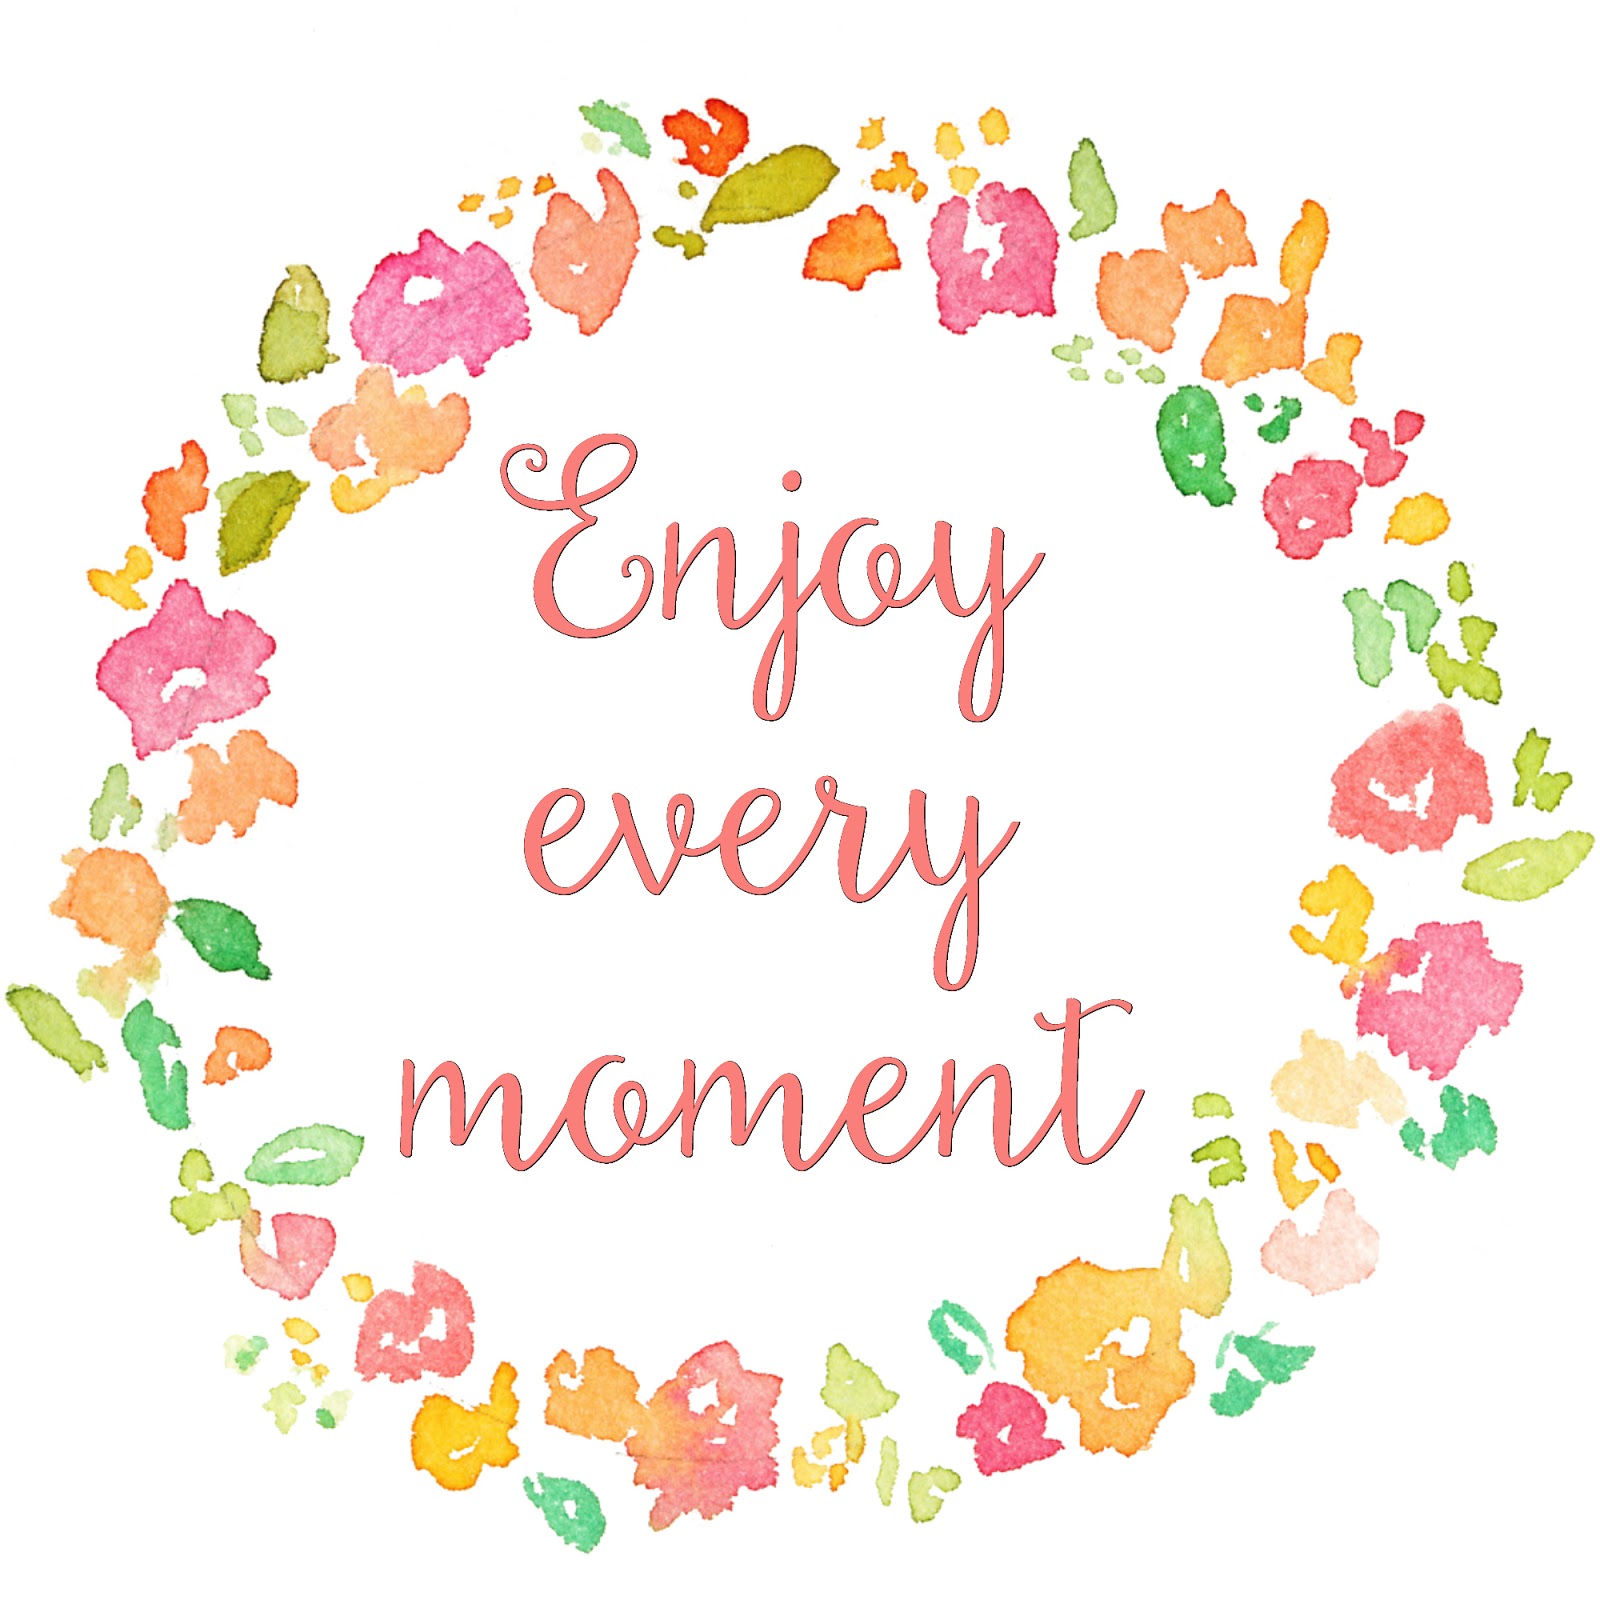 Do you enjoy “the” moment?